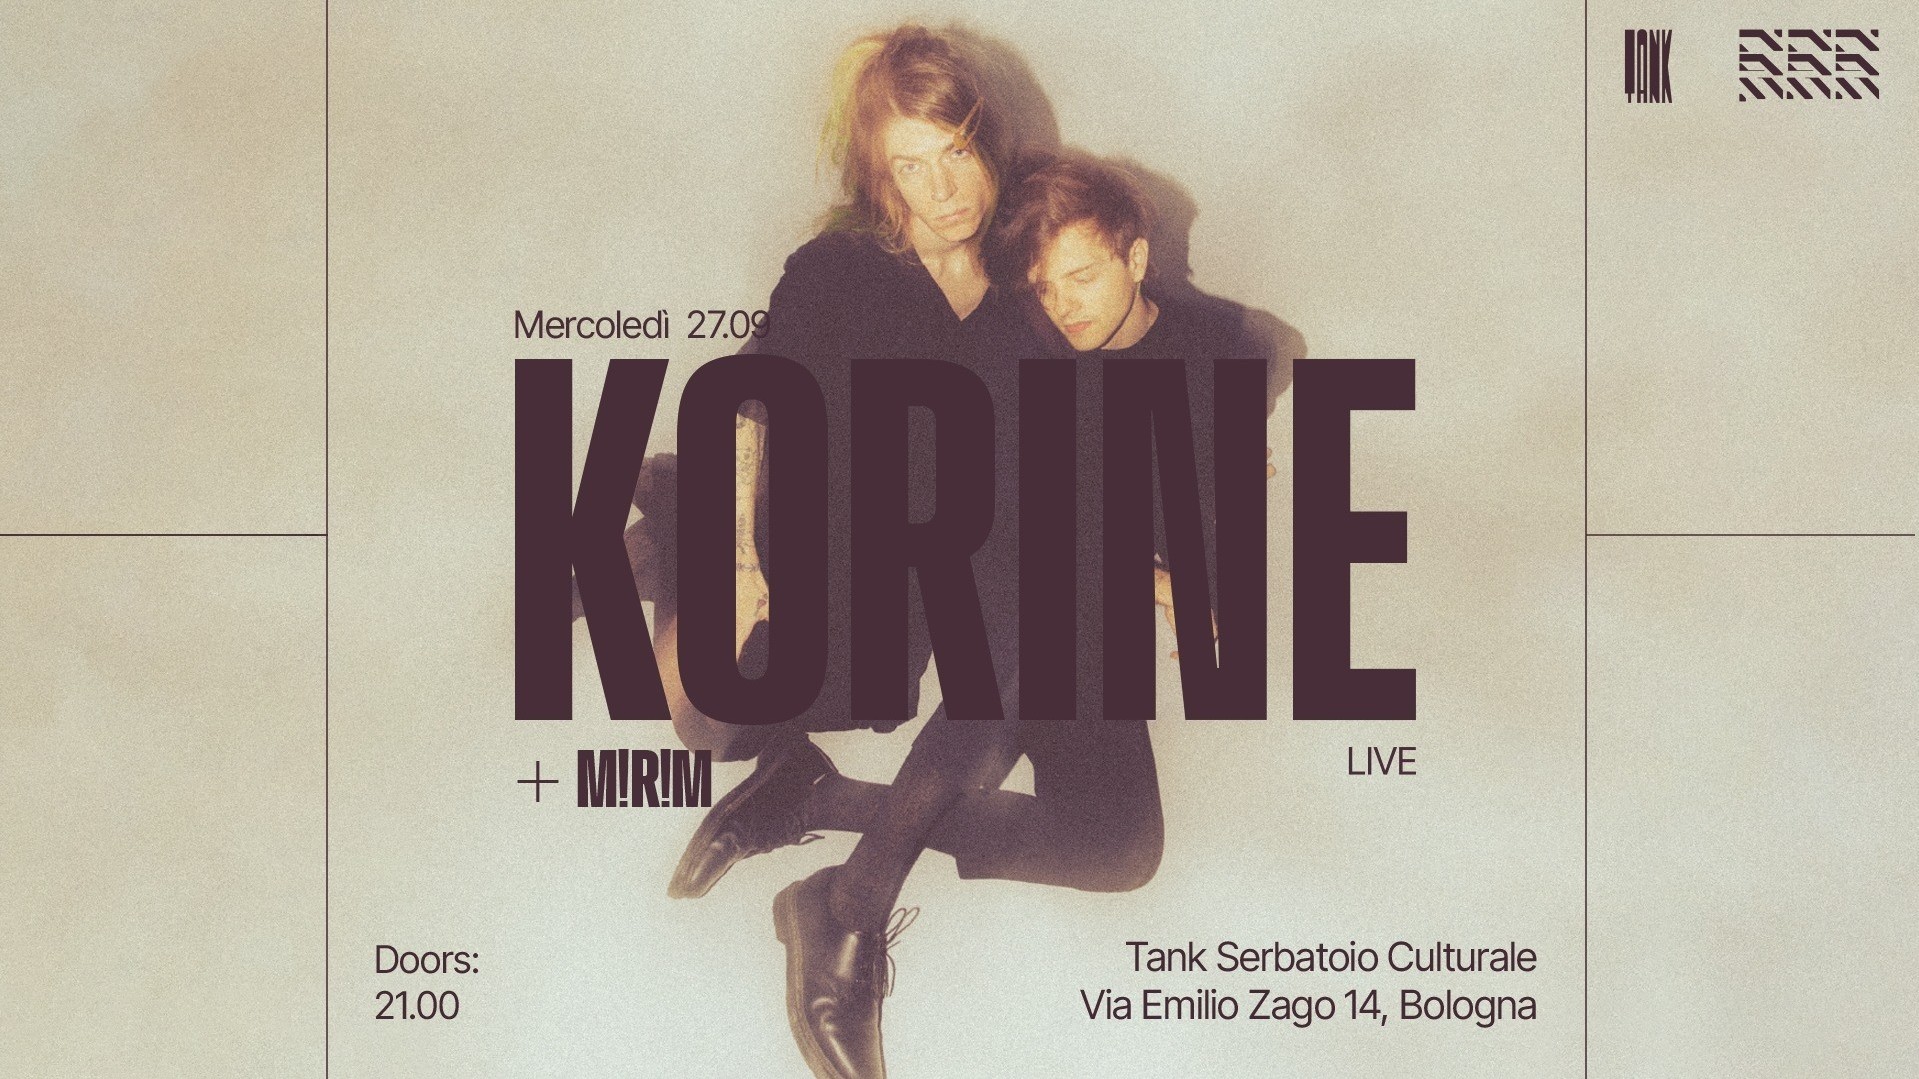 Korine + M!r!m!